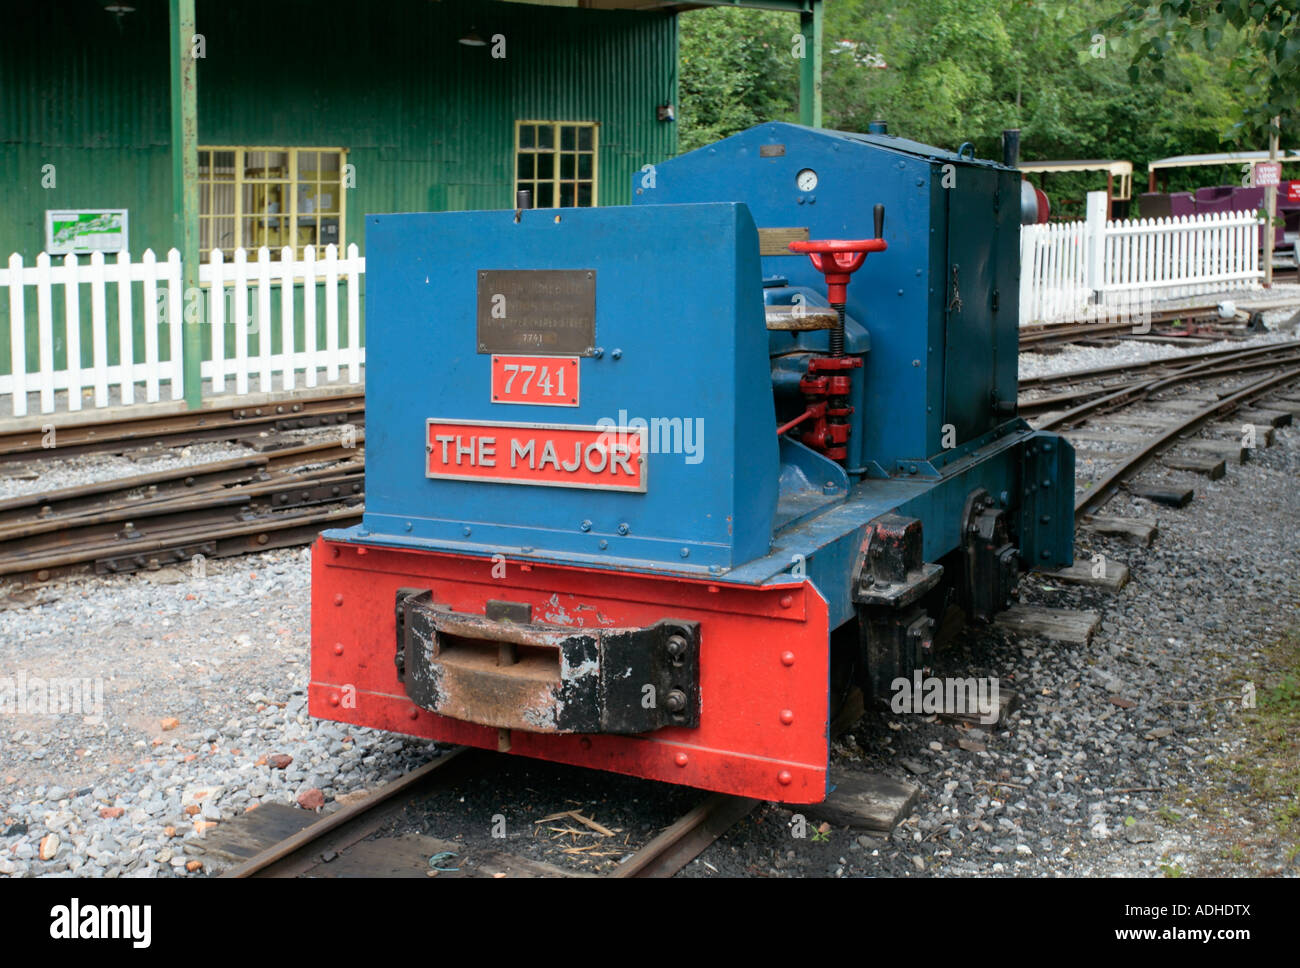 Locomotiva diesel "The Major" costruita da Orenstein & Koppel in mostra al Museo del lavoro di Amberley, West Sussex Foto Stock